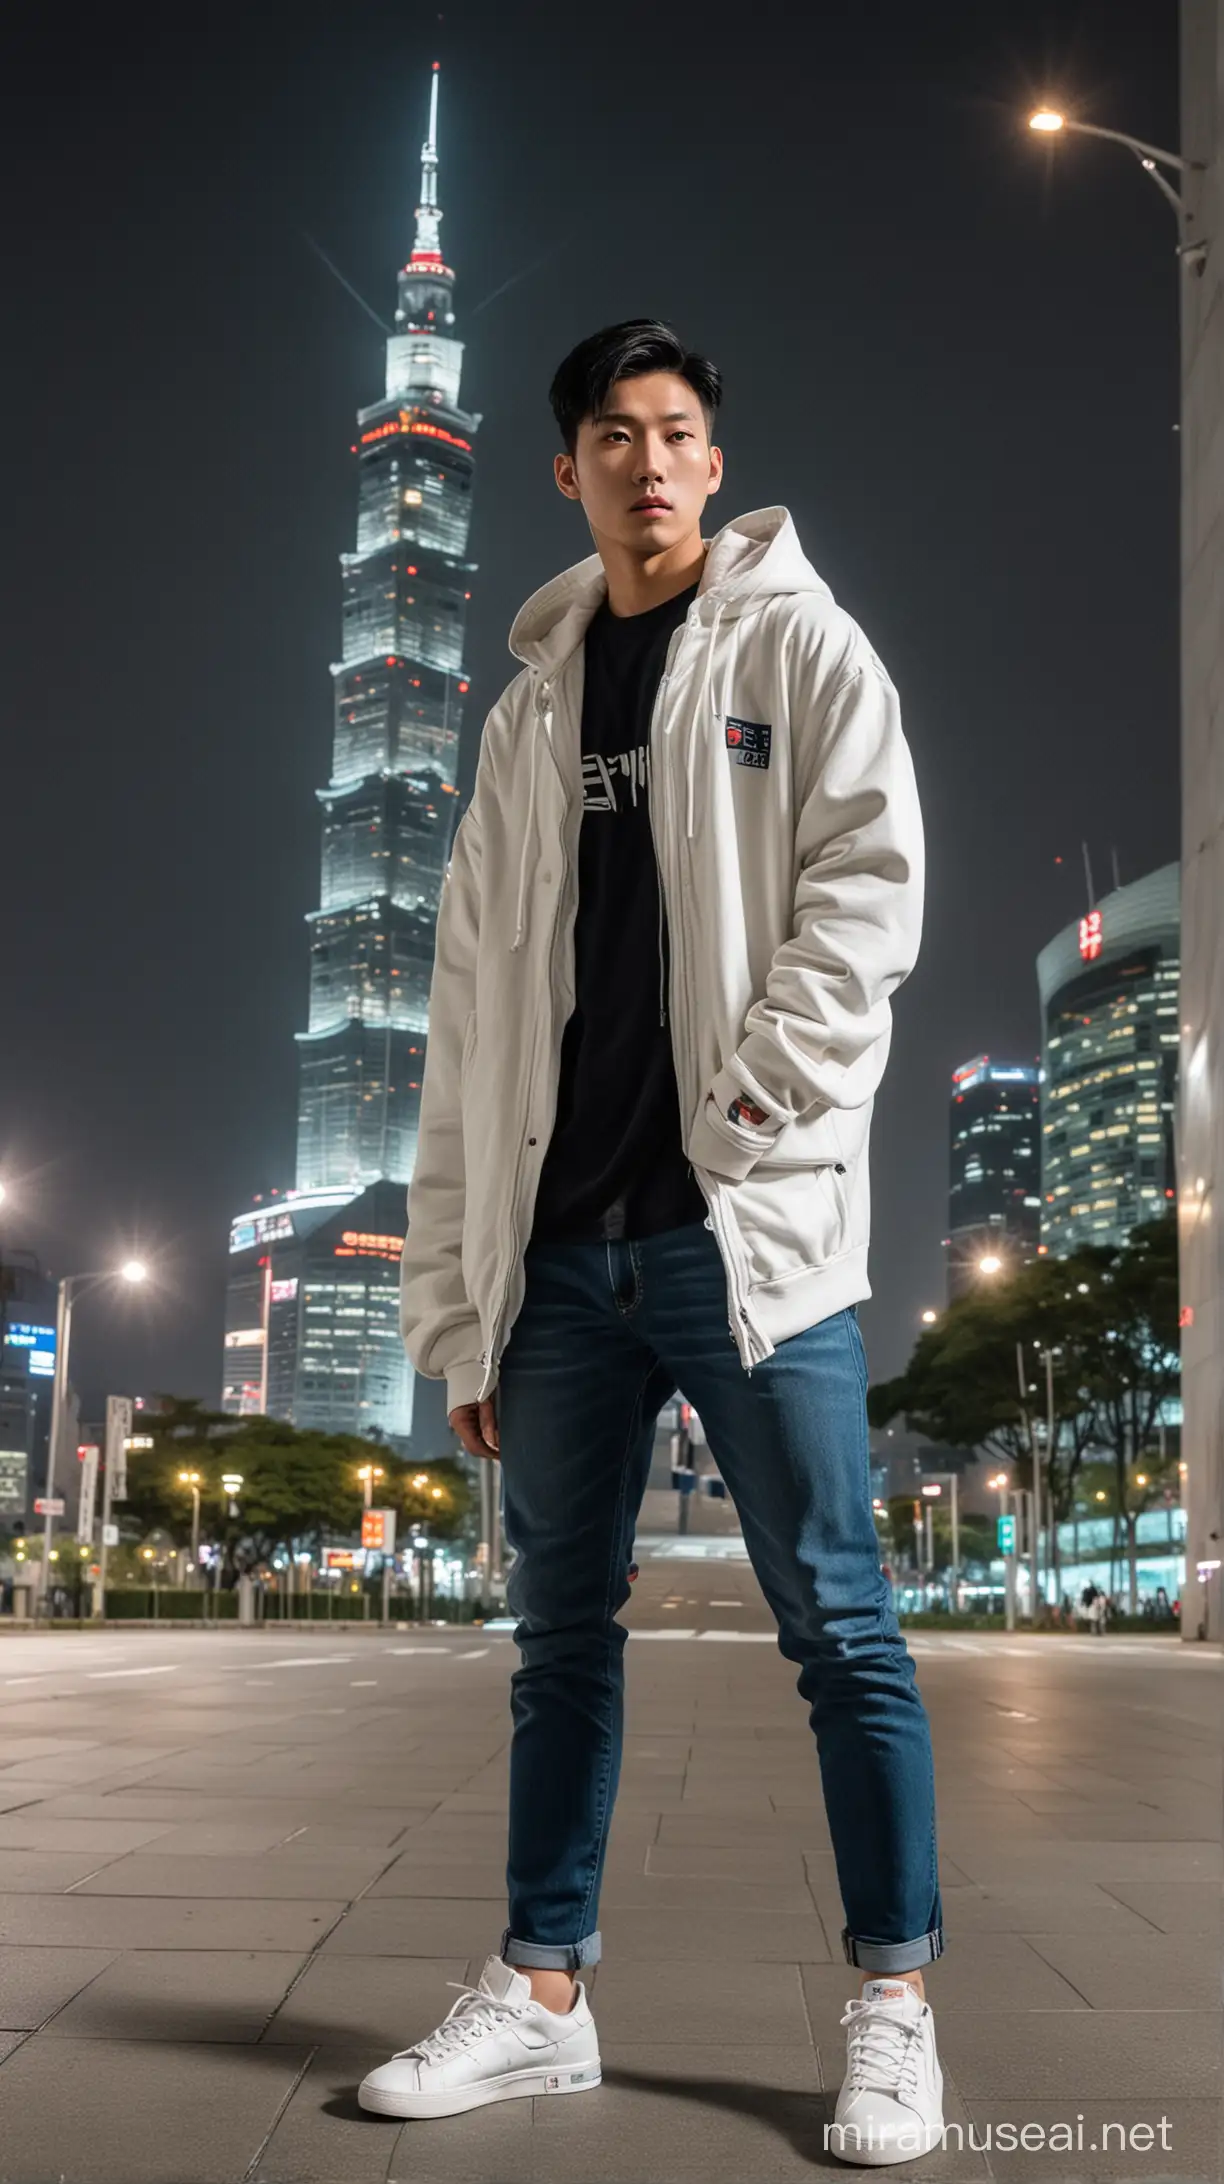 Romantic Korean Man in Hoodie Jacket Poses by Taipei Tower at Night